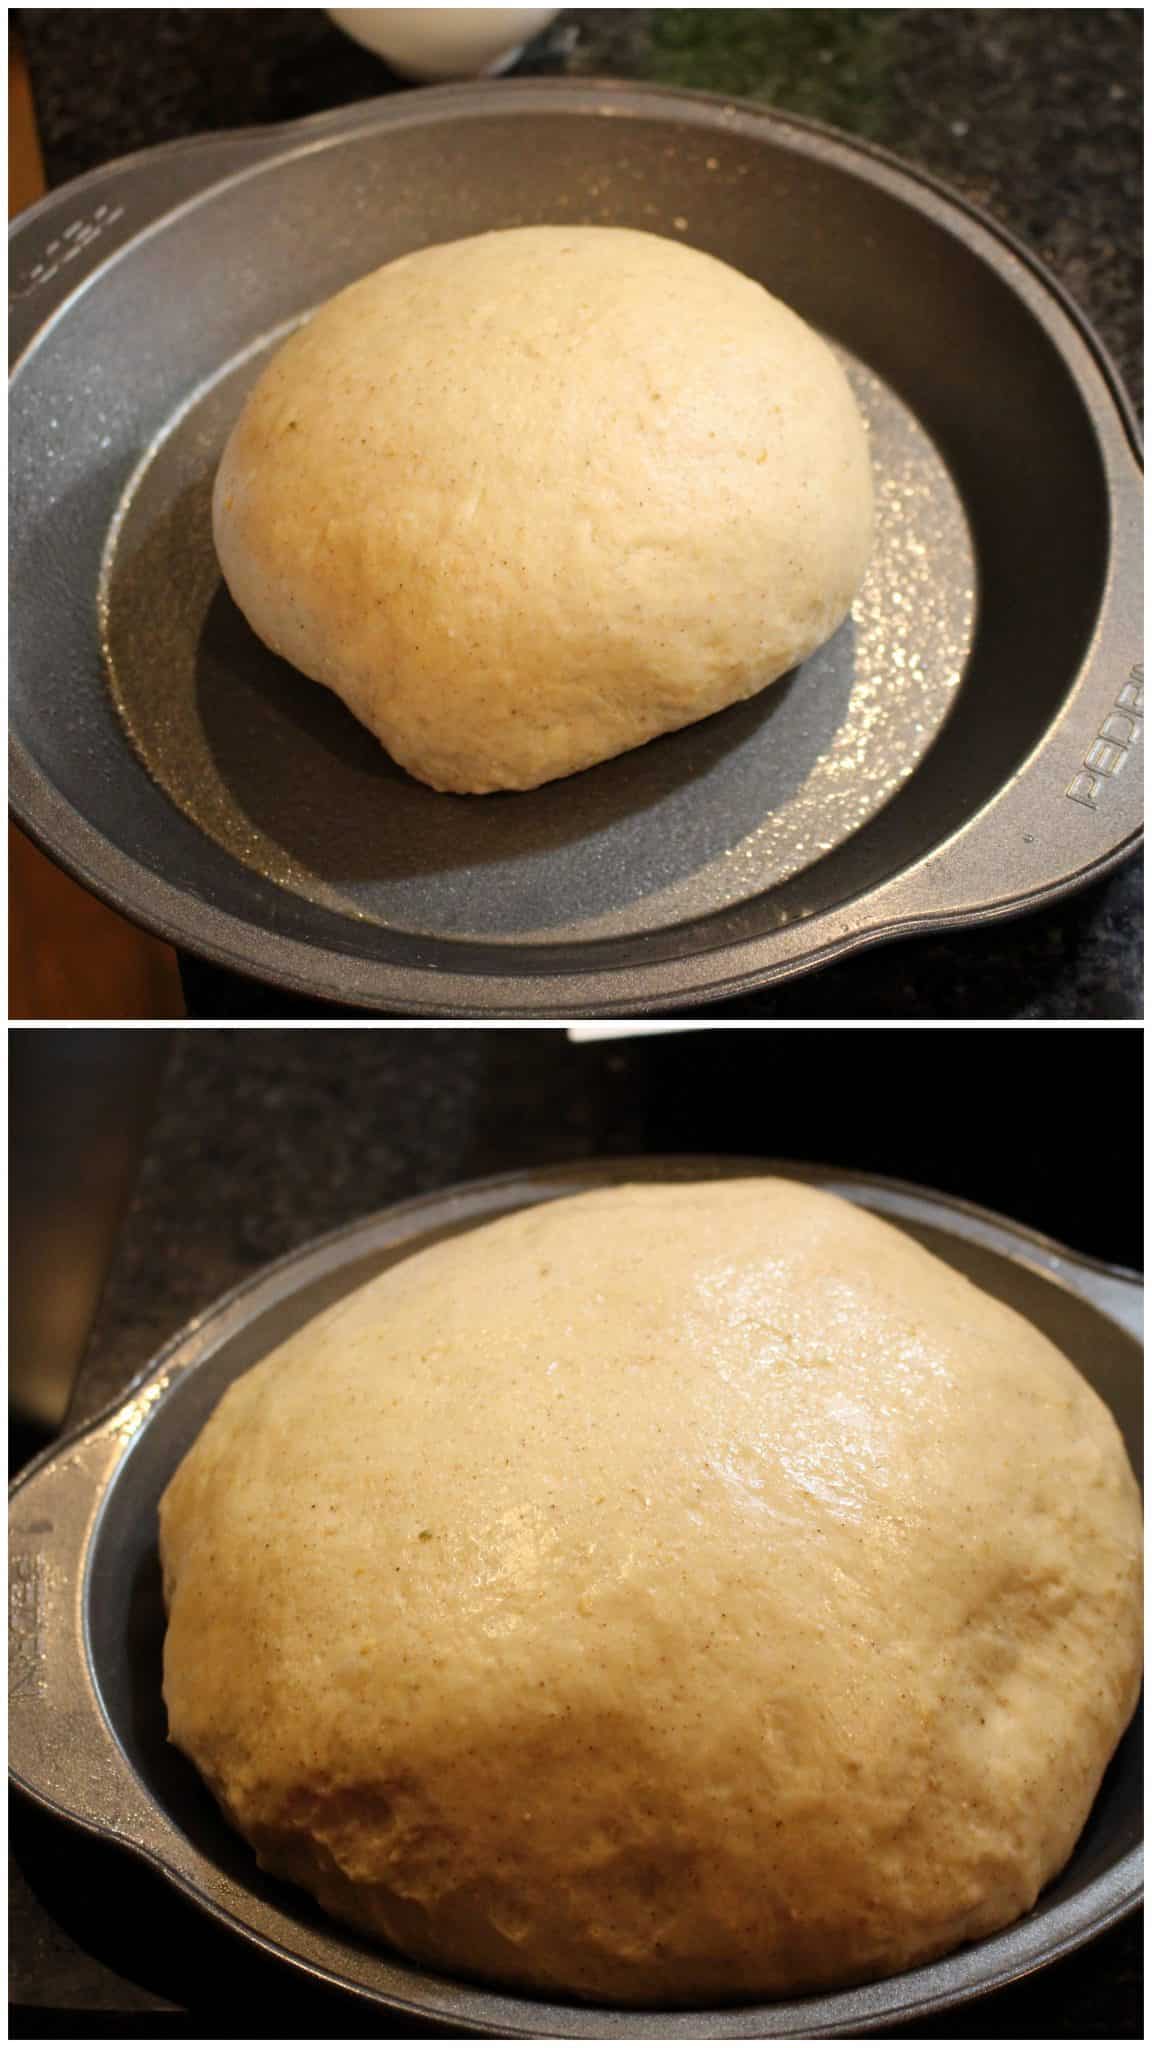 Making a Dough in a Bowl